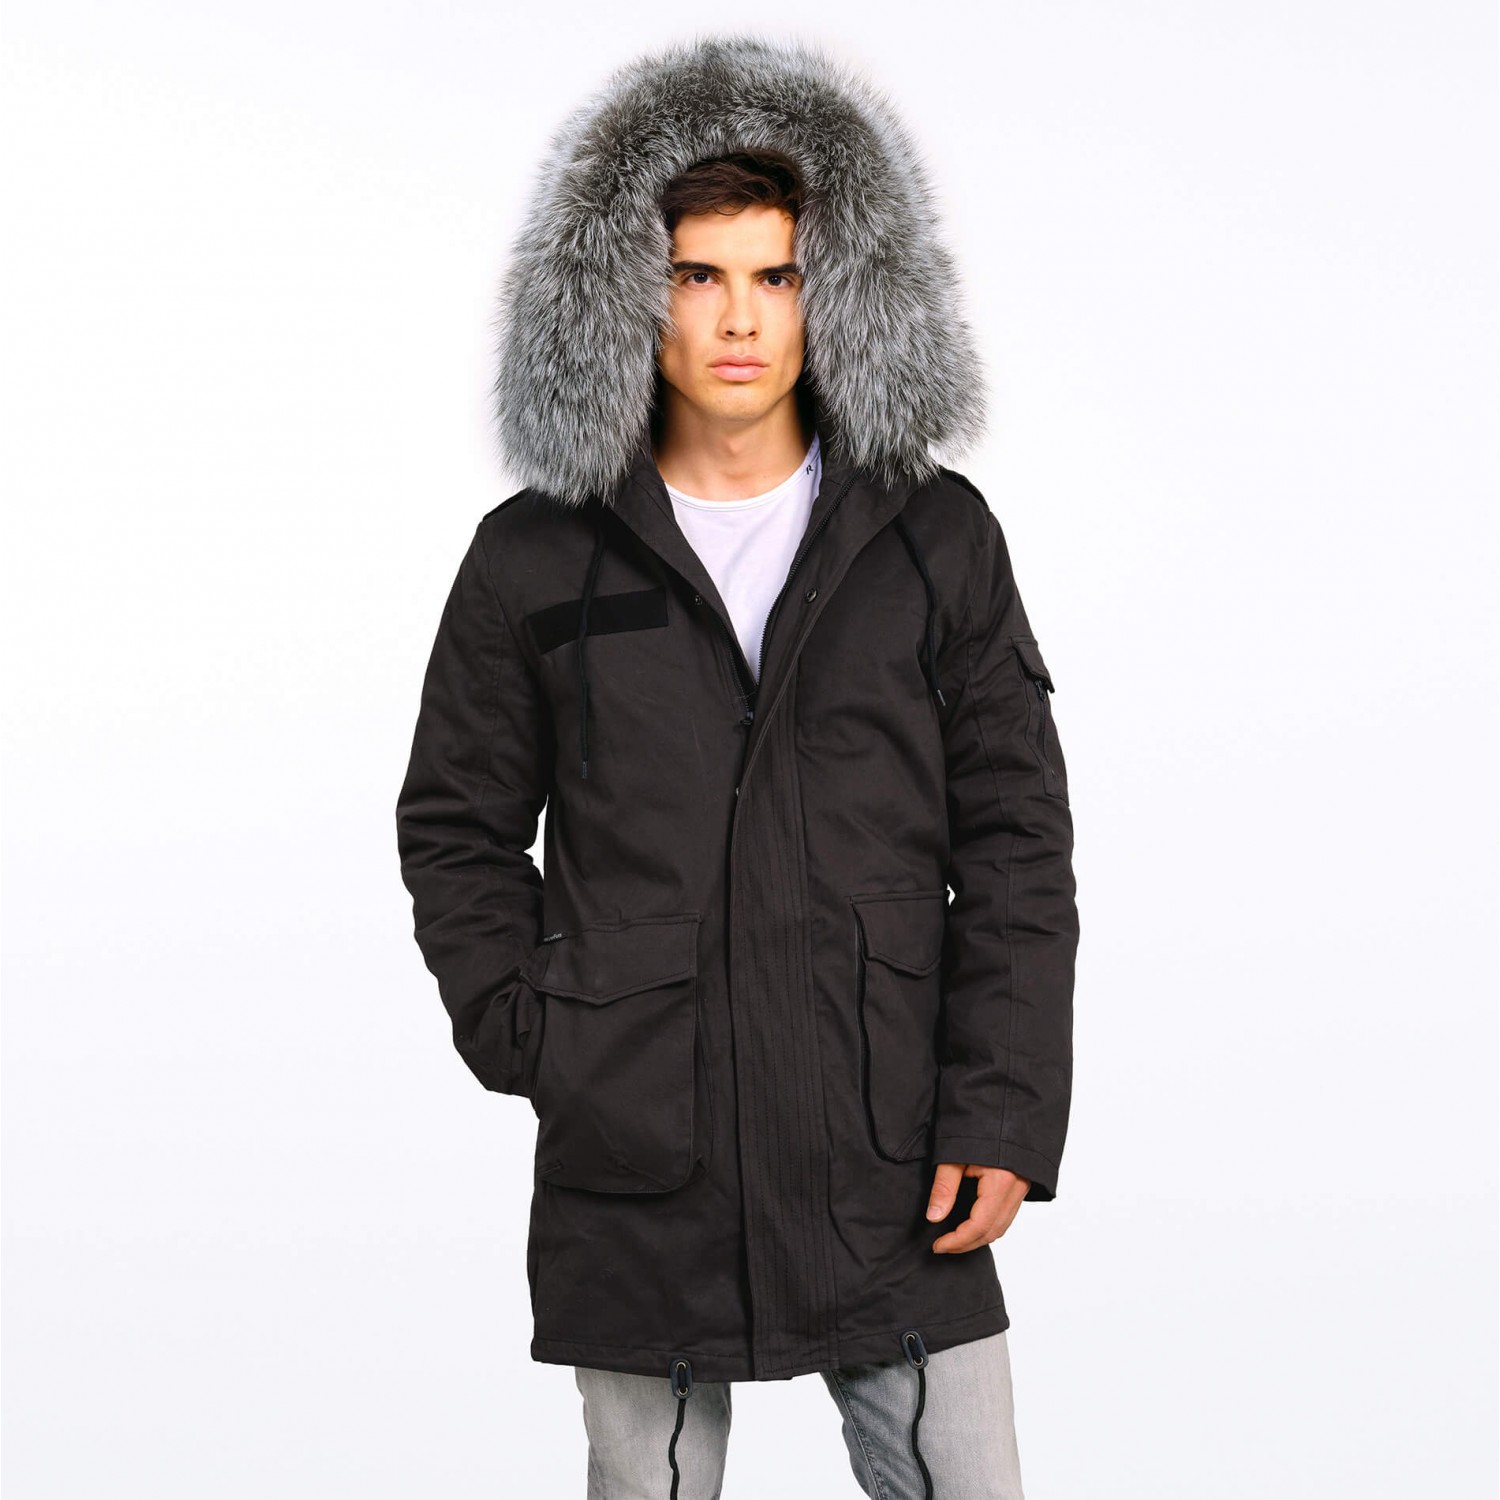 Mens coat with Fur